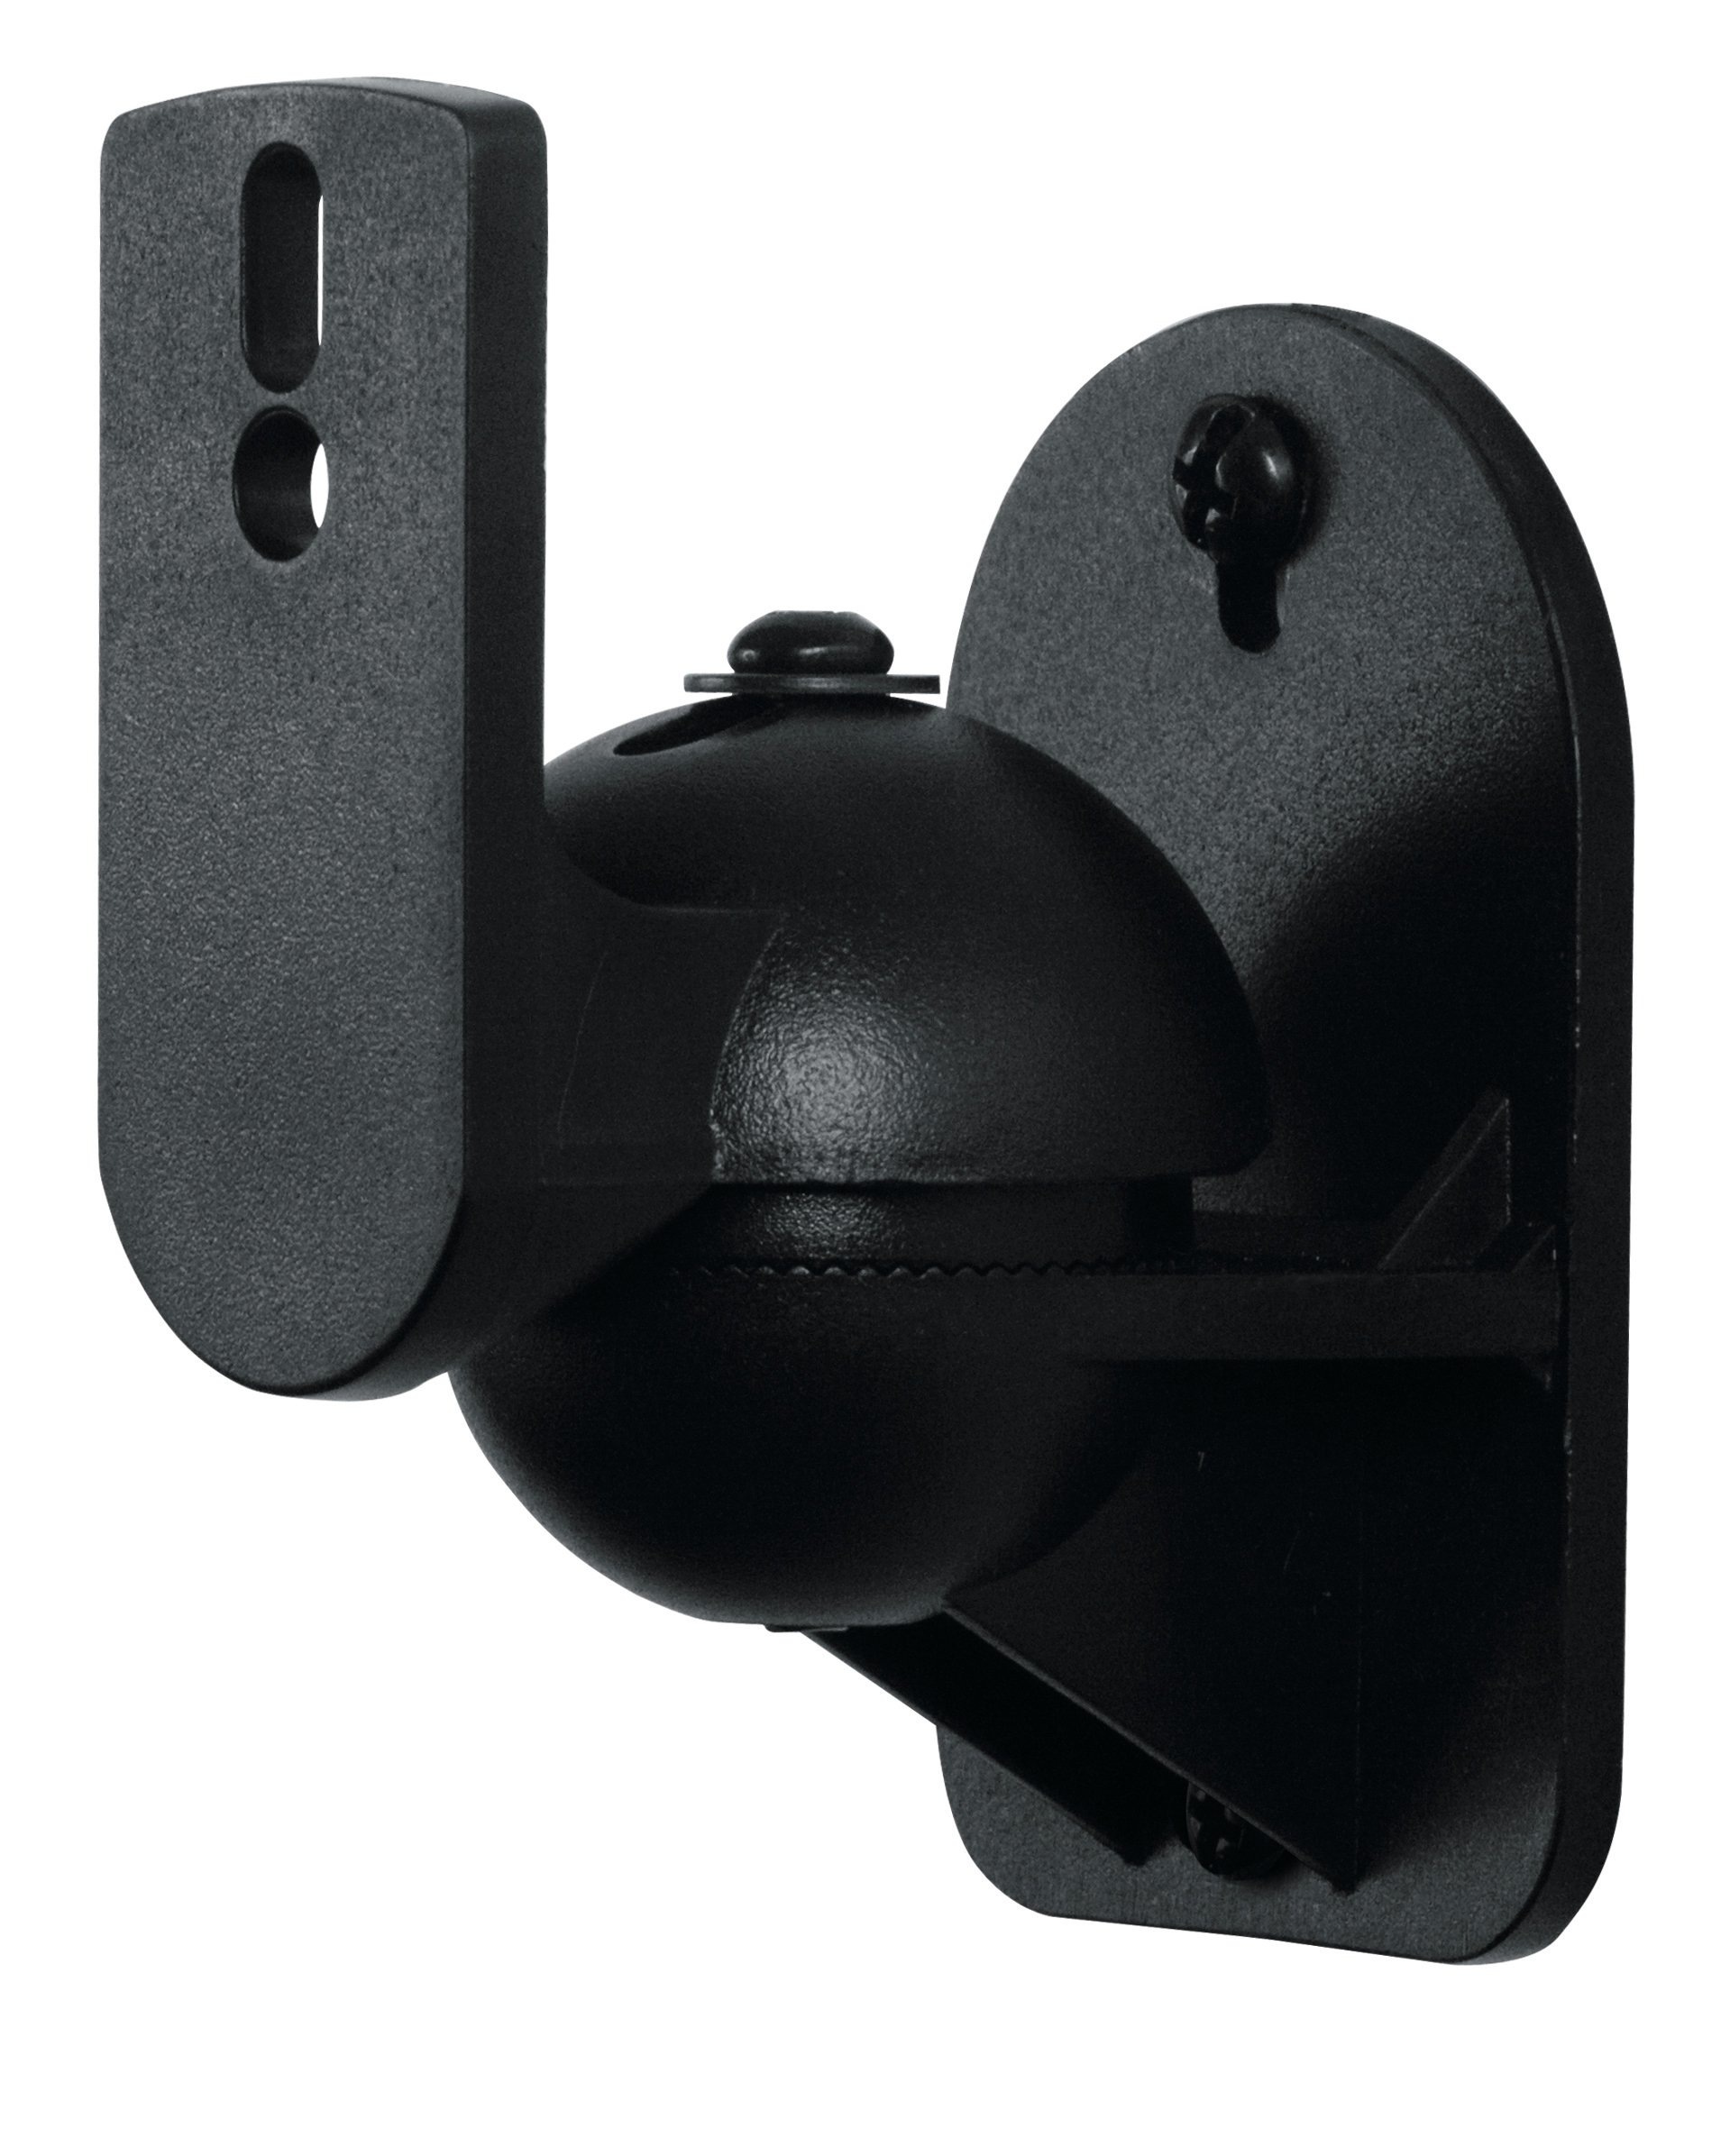 Buy Surround Sound Speaker Wall Mounts 